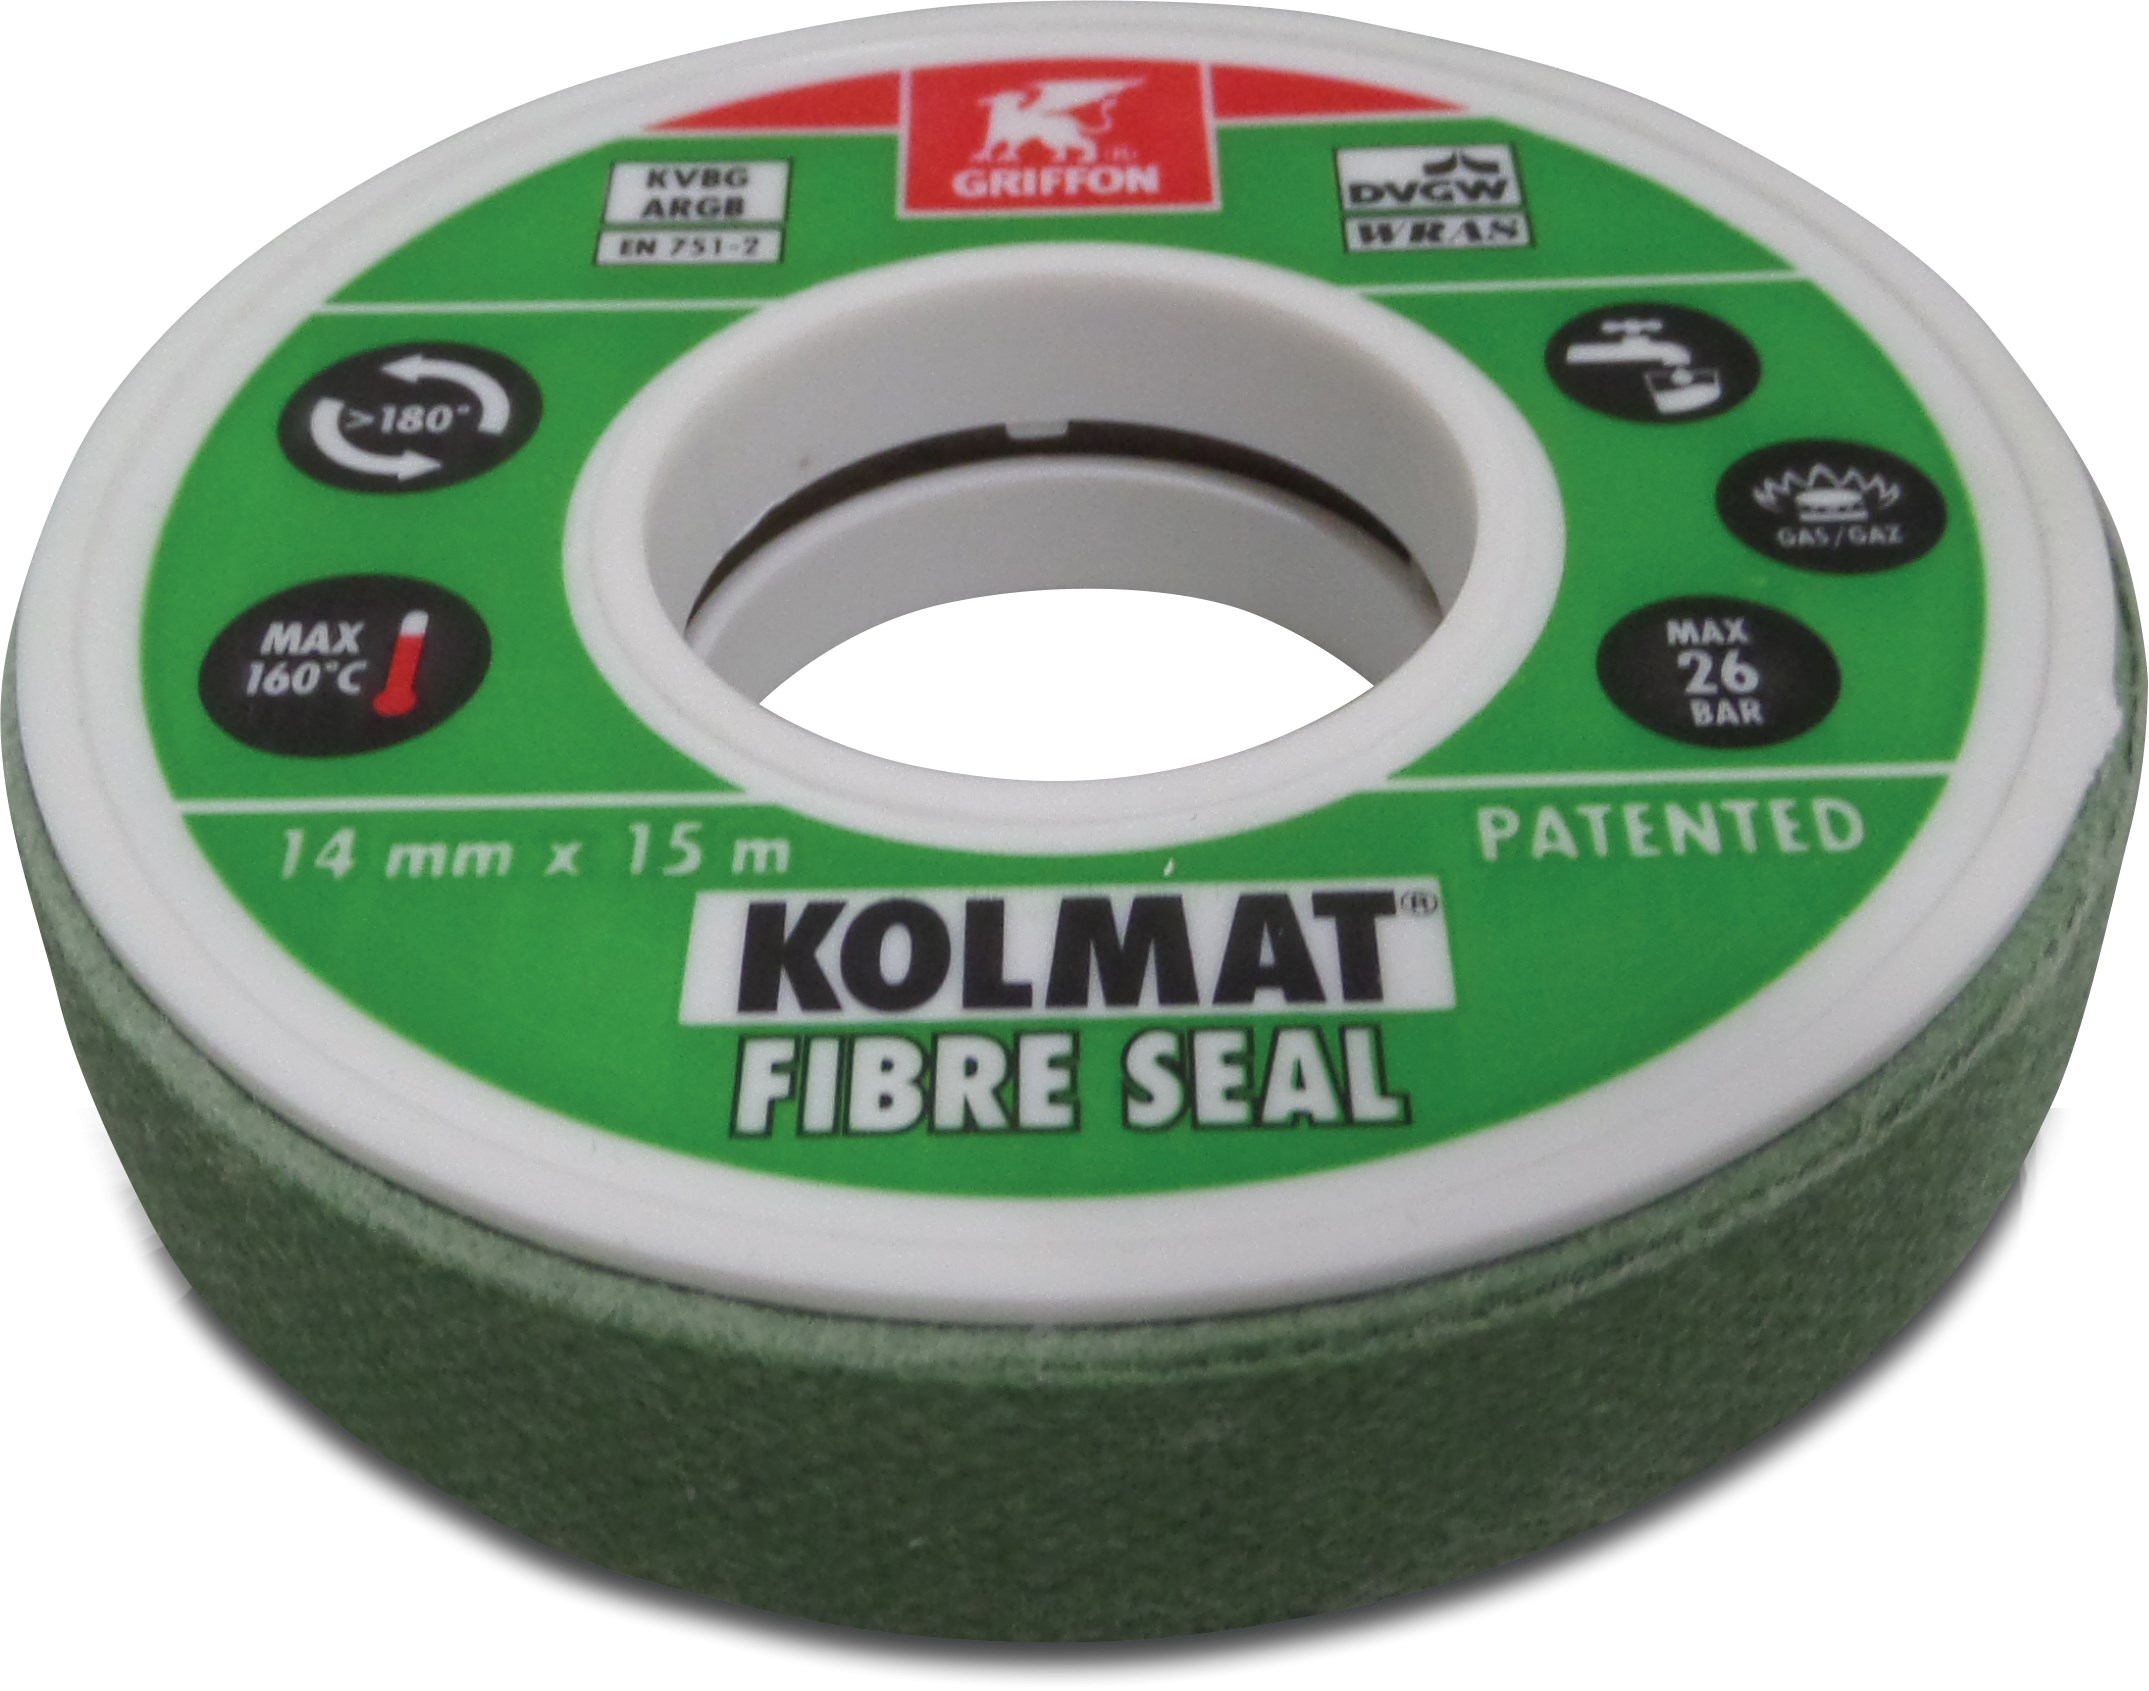 Griffon Pipe thread fibre sealant 12 mm green 15m DVGW/GASTEC/WRAS type Kolmat label NL/FR